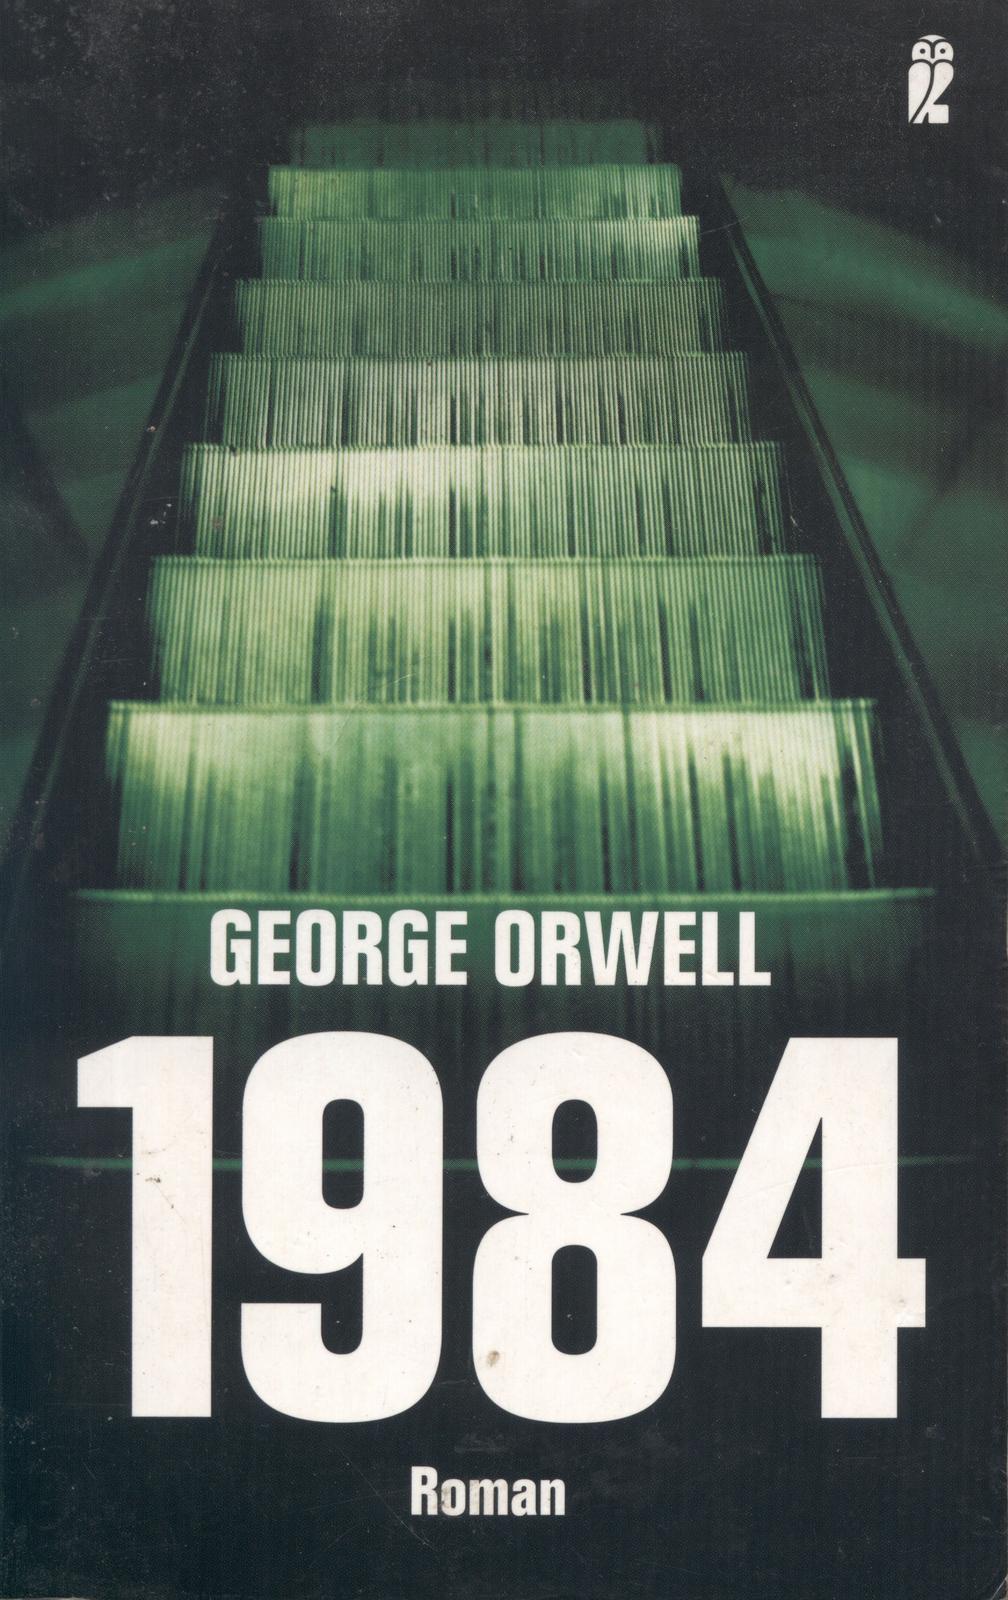 George Orwell: 1984 (German language, 2007, Ullstein Verlag)